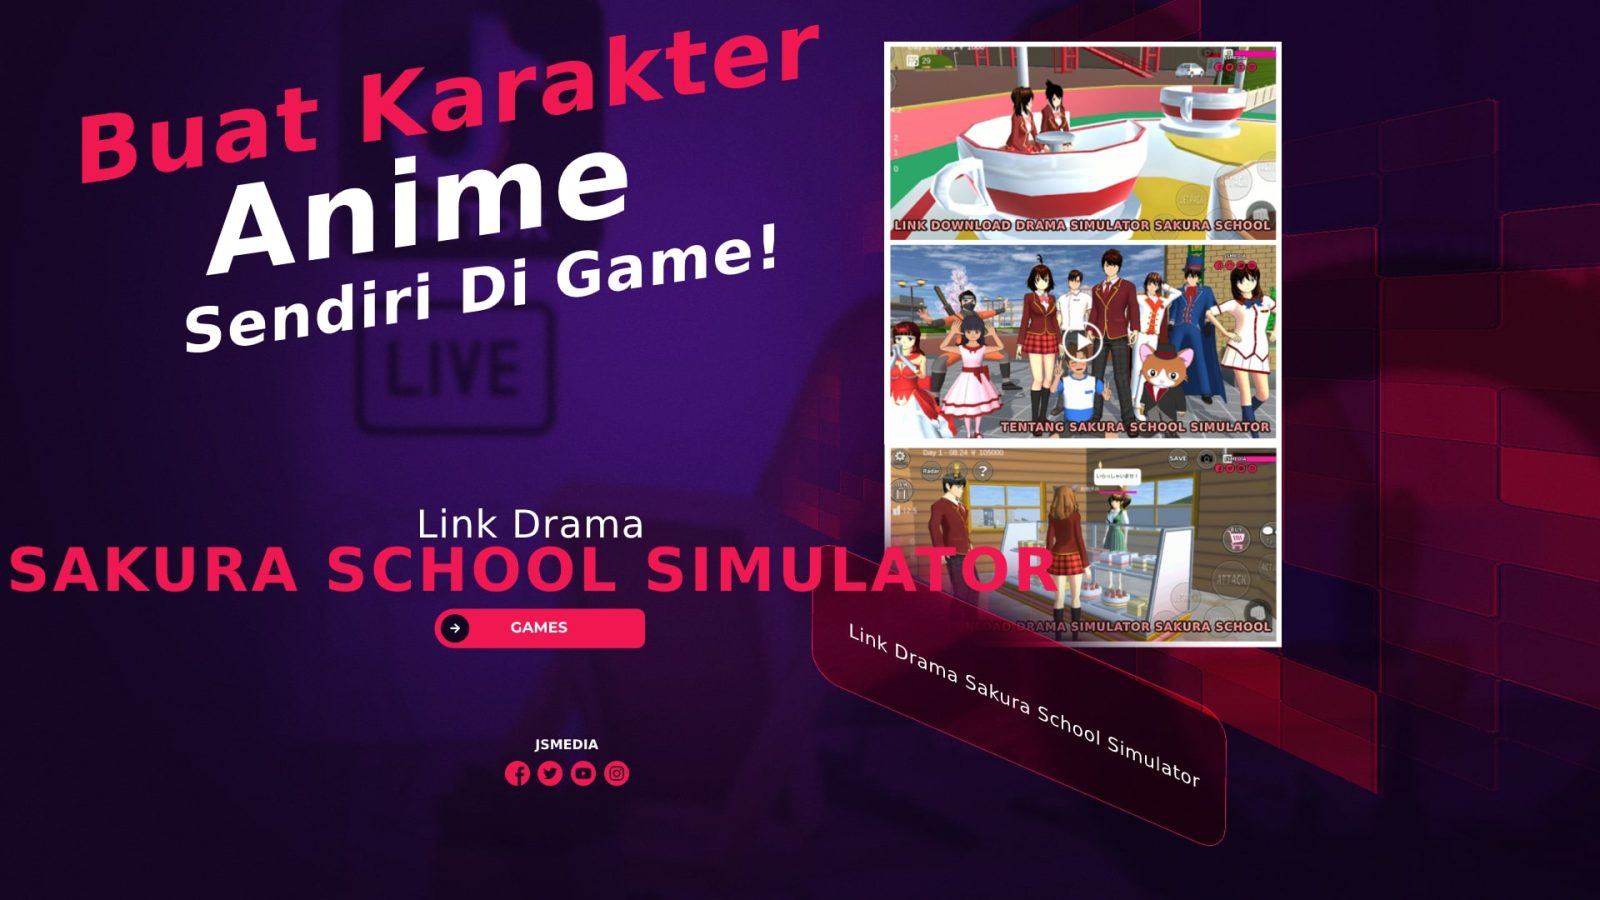 Link Drama Sakura School Simulator, Buat Karakter Anime Sendiri